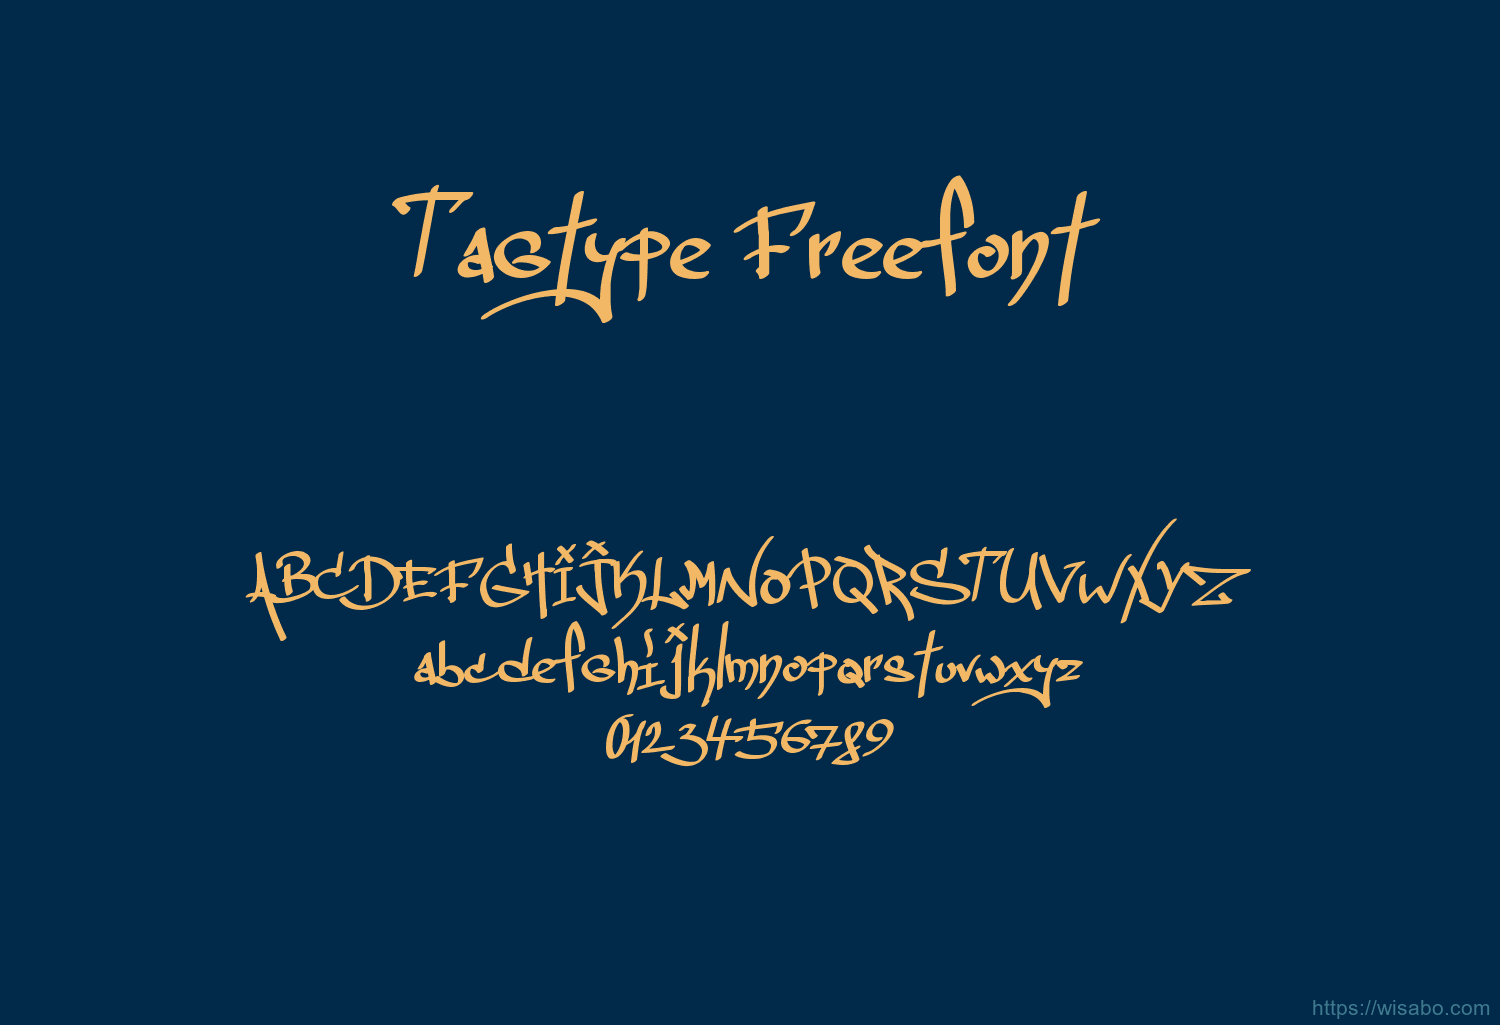 Tagtype Freefont